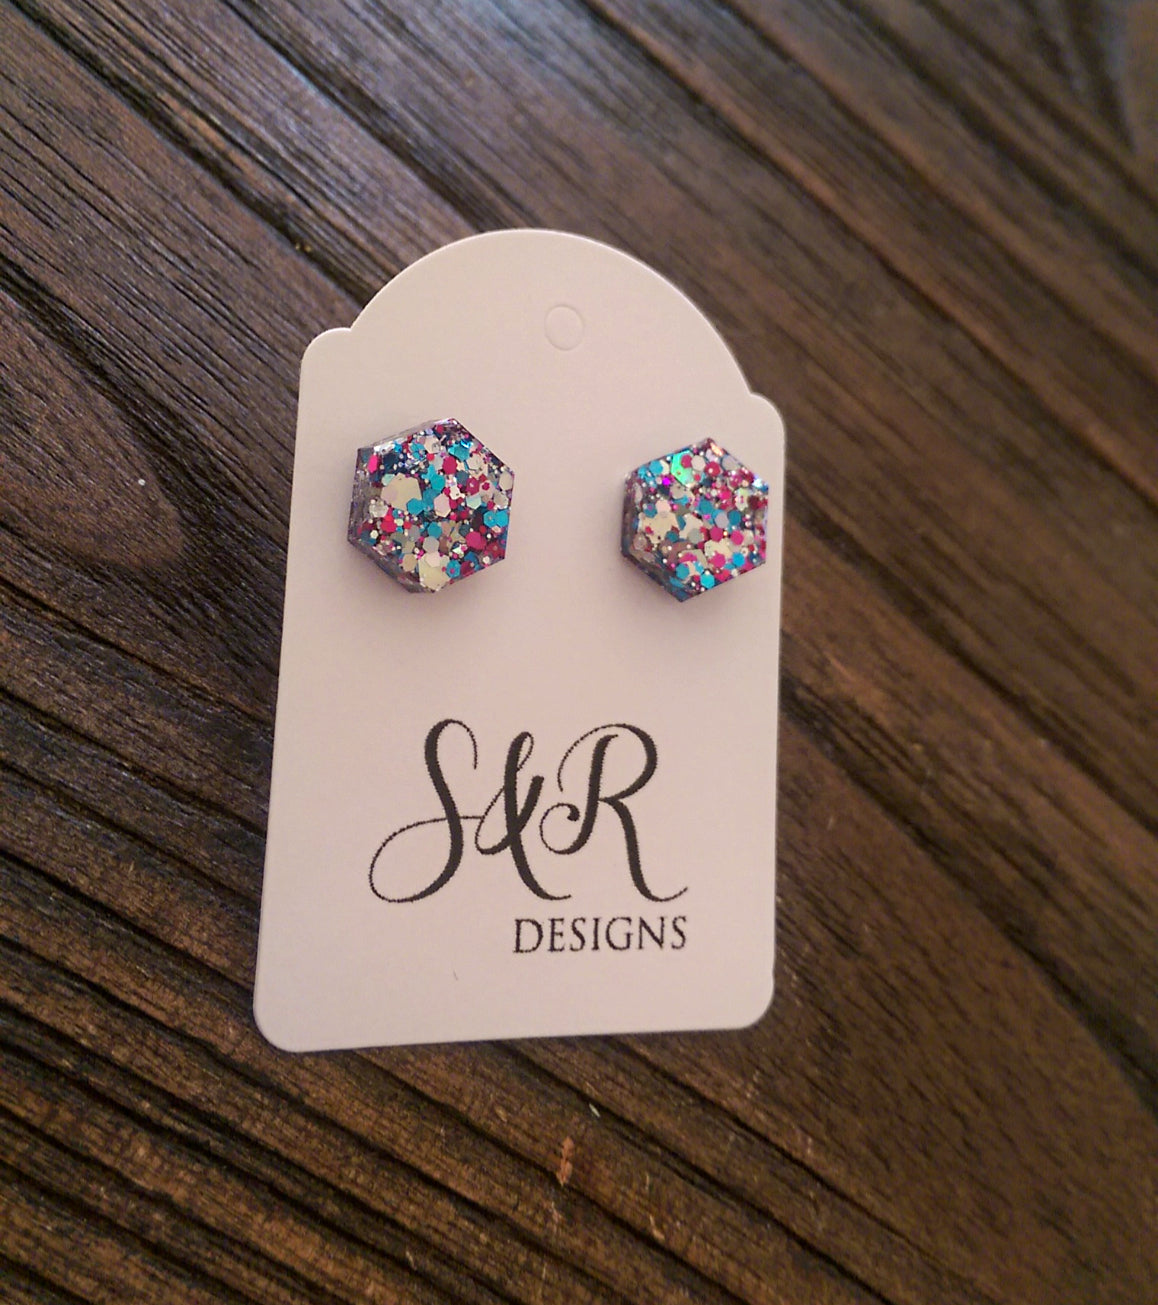 Hexagon Resin Stud Earrings, Mixed Glitter Earrings. Stainless Steel Stud Earrings. 10mm - Silver and Resin Designs